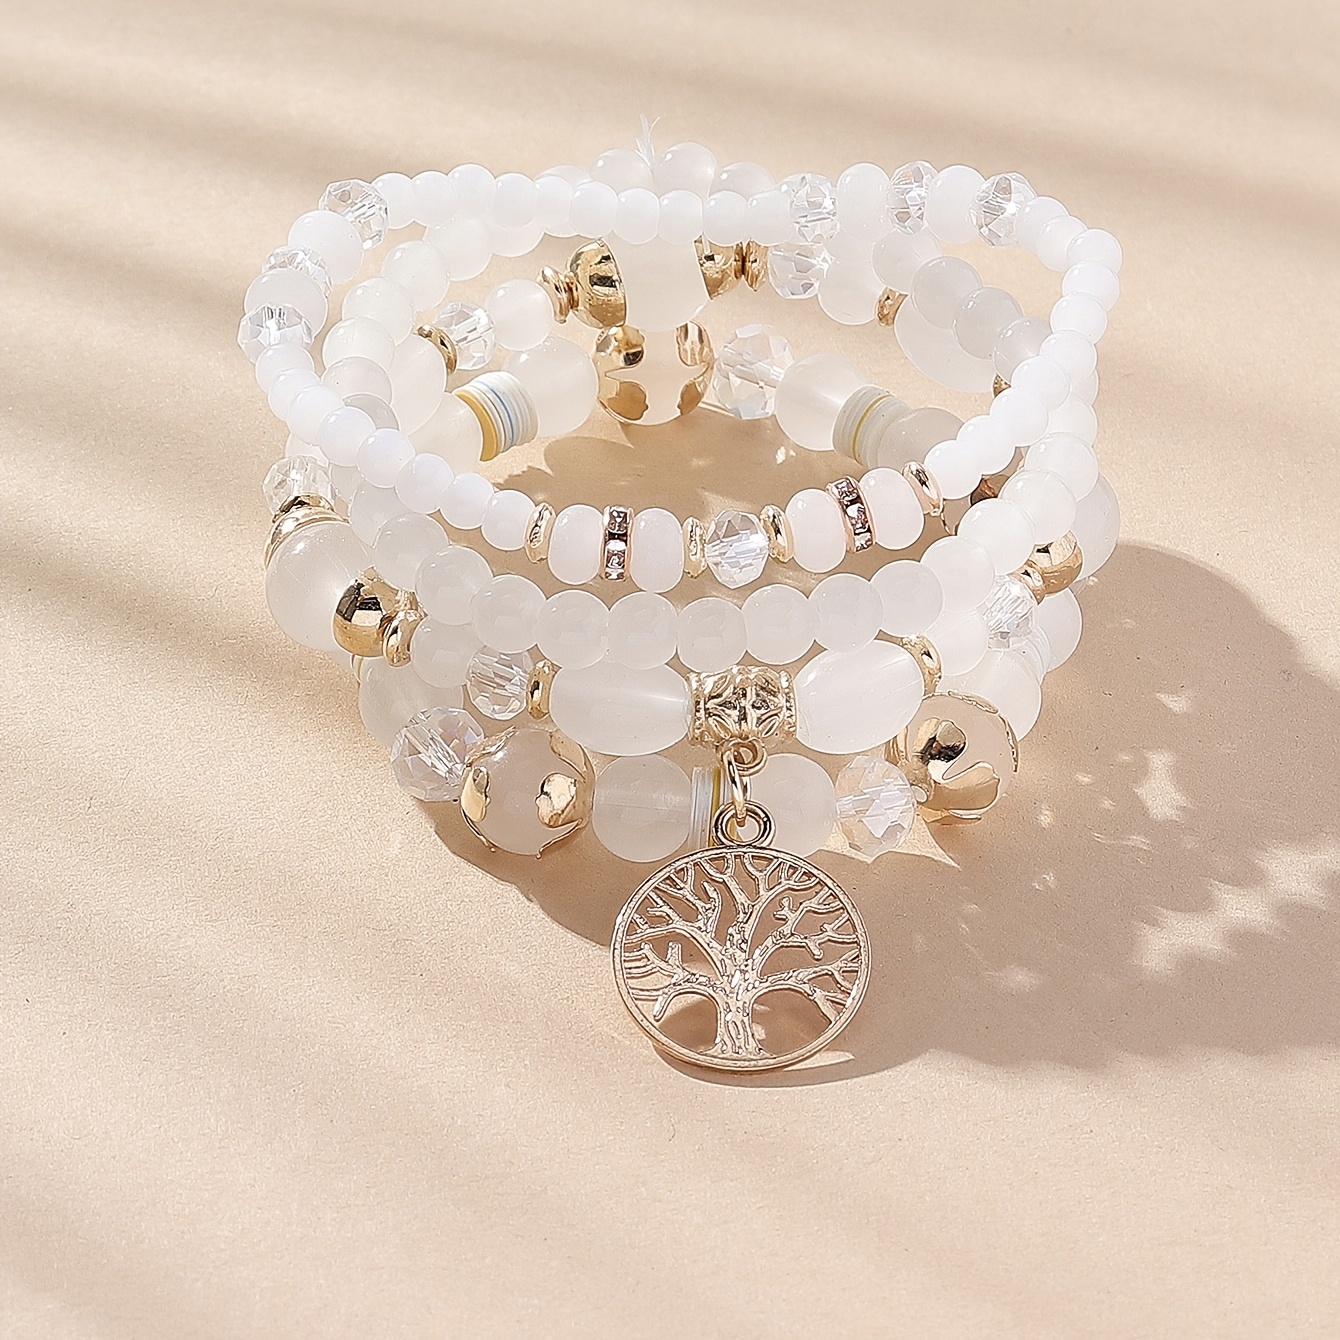 1pc Cross Beads Pendant Bracelets Natural Lava Pine Bracelet Women Yoga  Jewelry